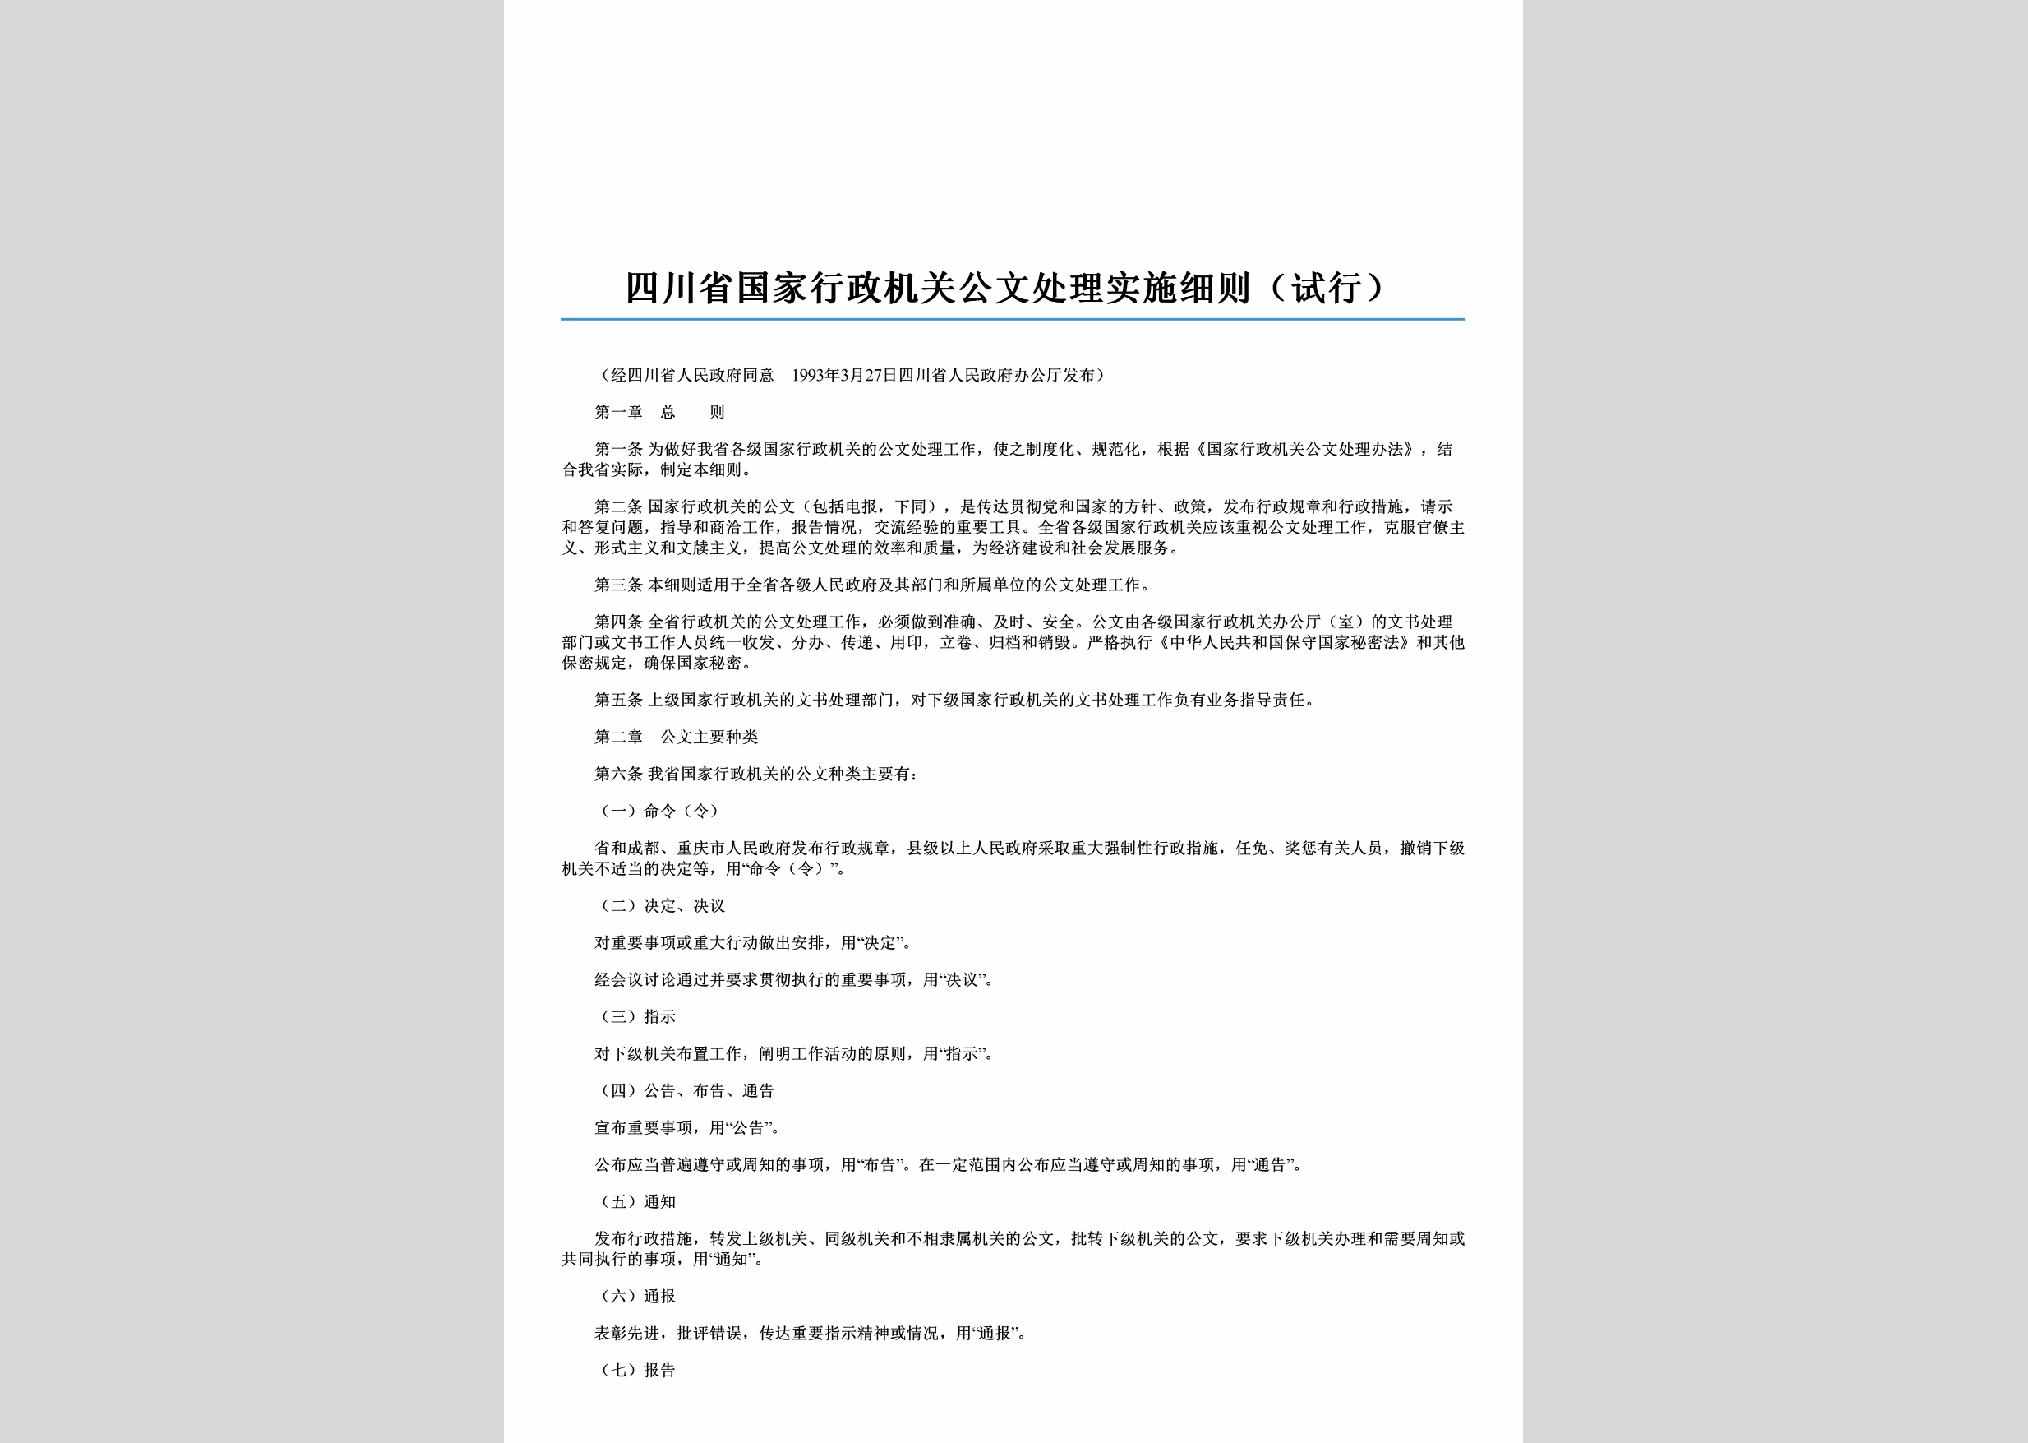 SC-XZGWCLX-2006：四川省国家行政机关公文处理实施细则（试行）